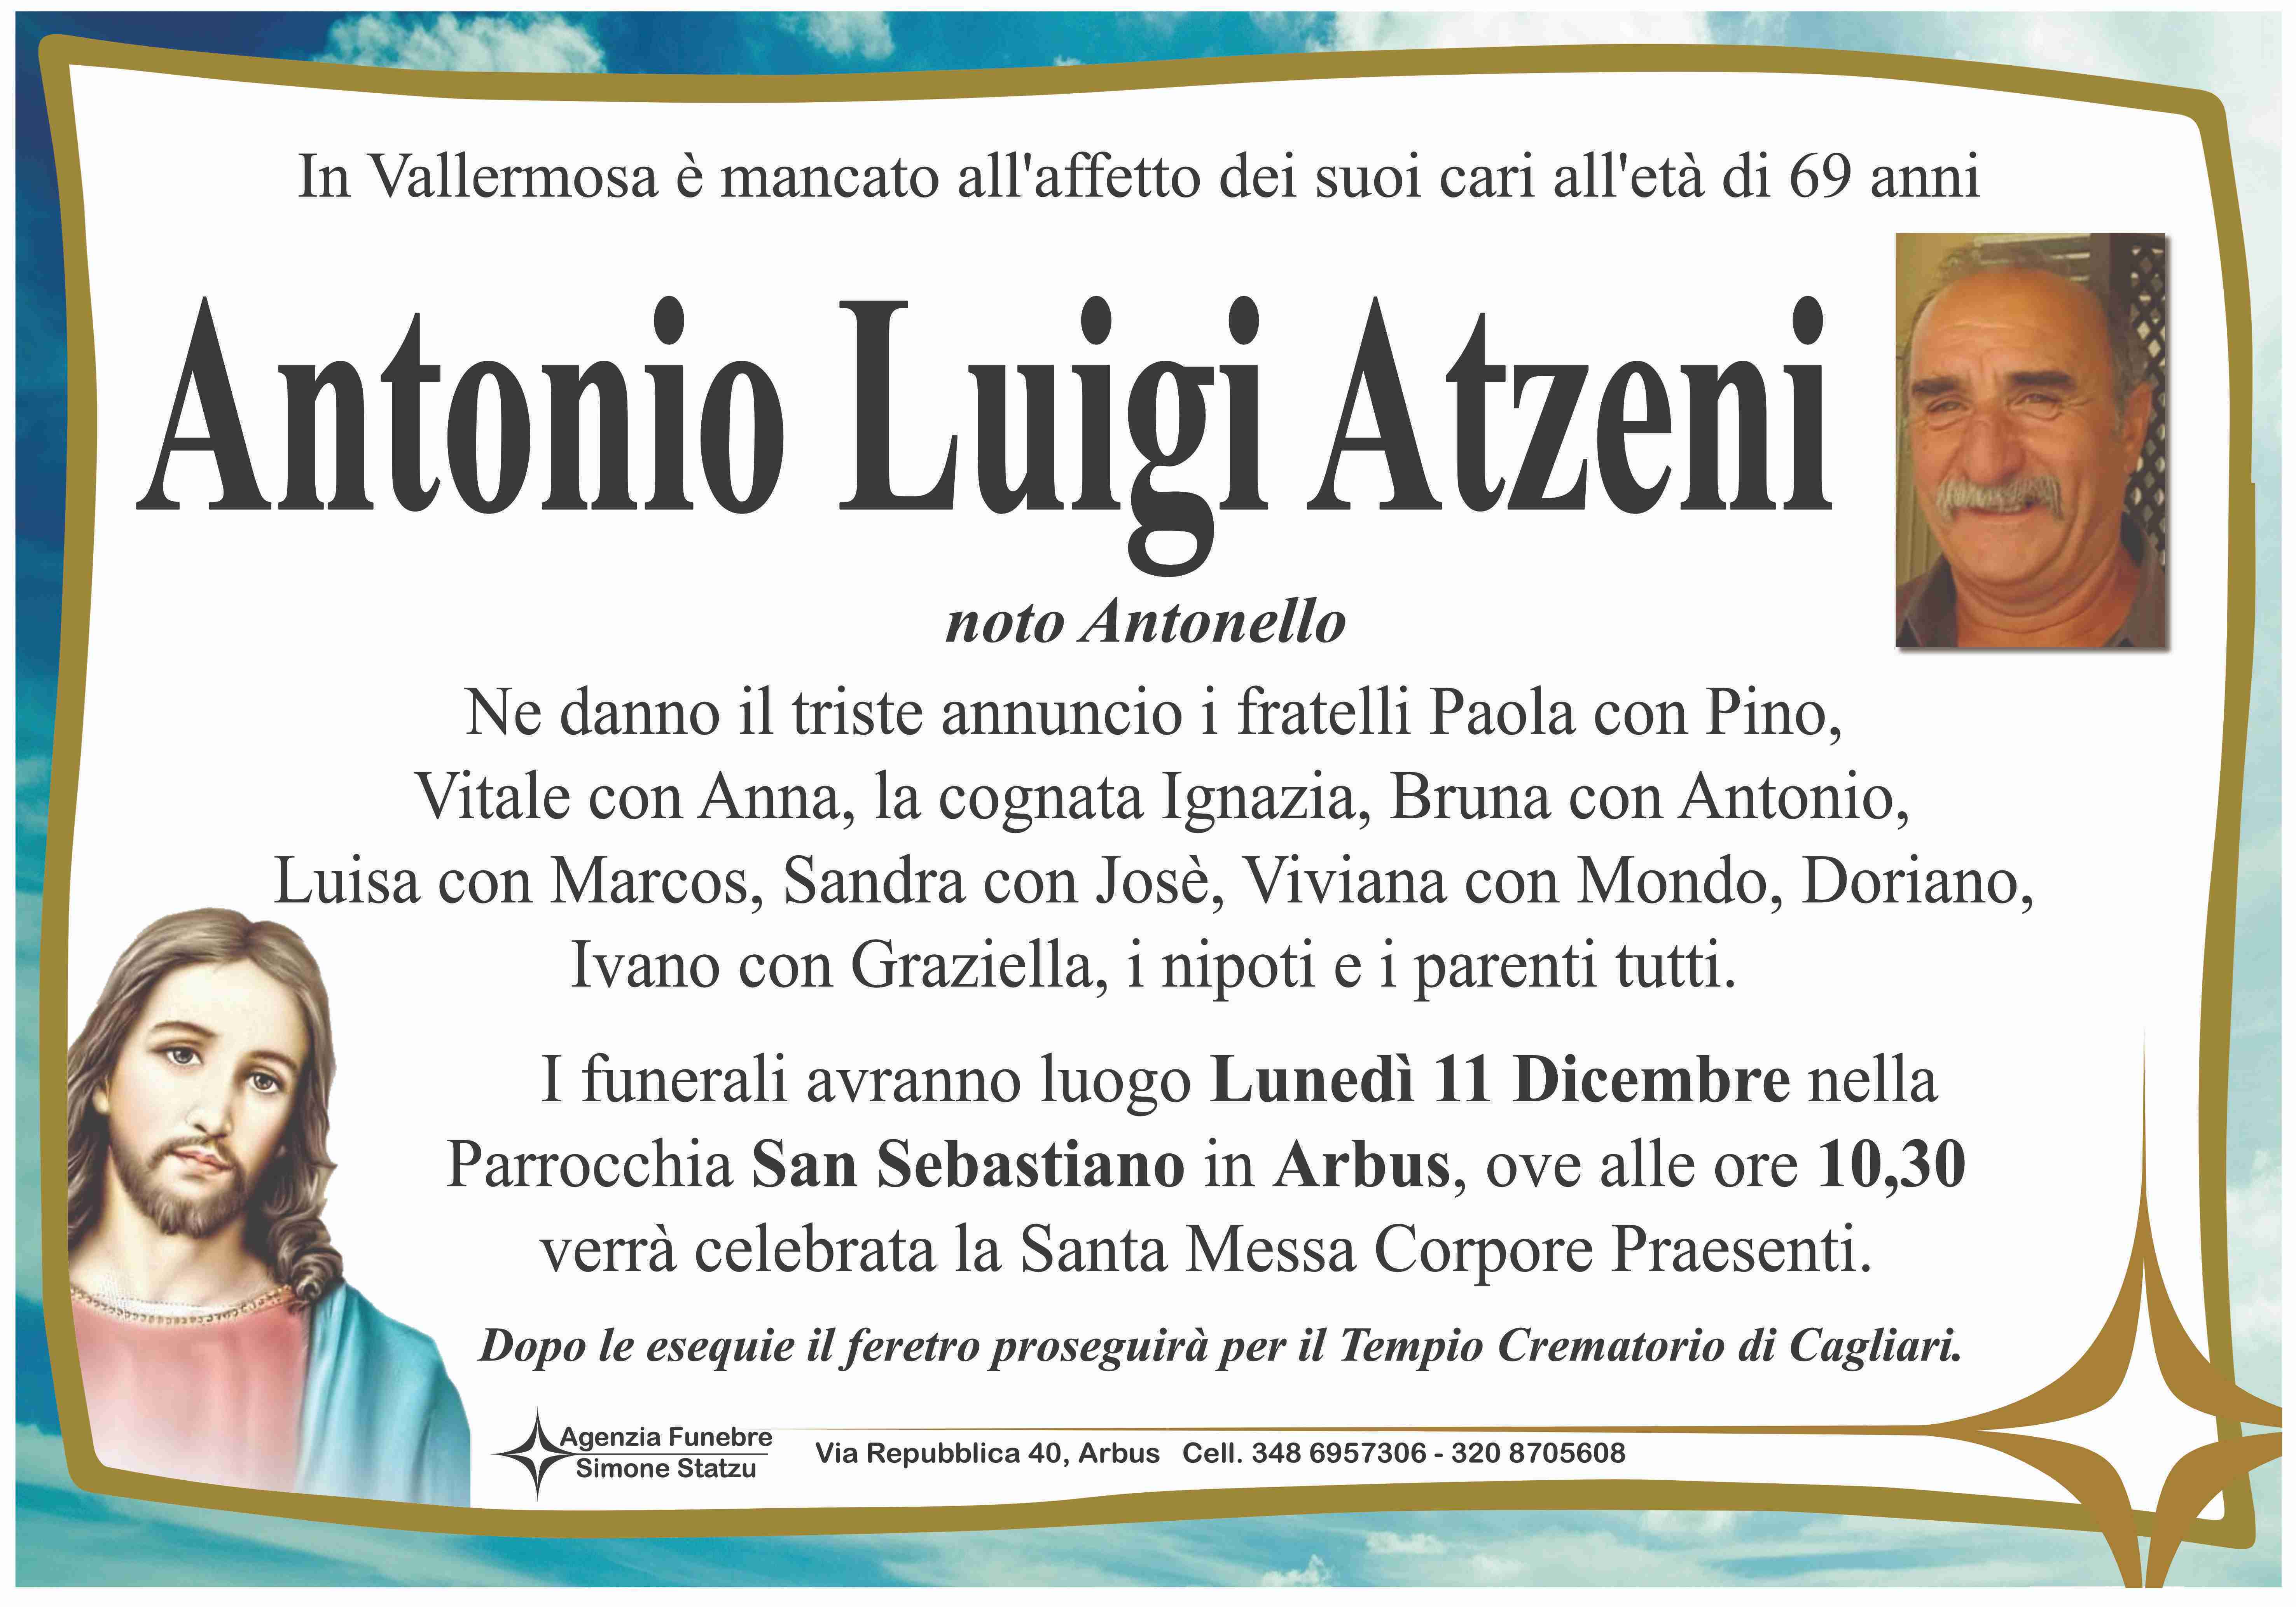 Antonio Luigi Atzeni